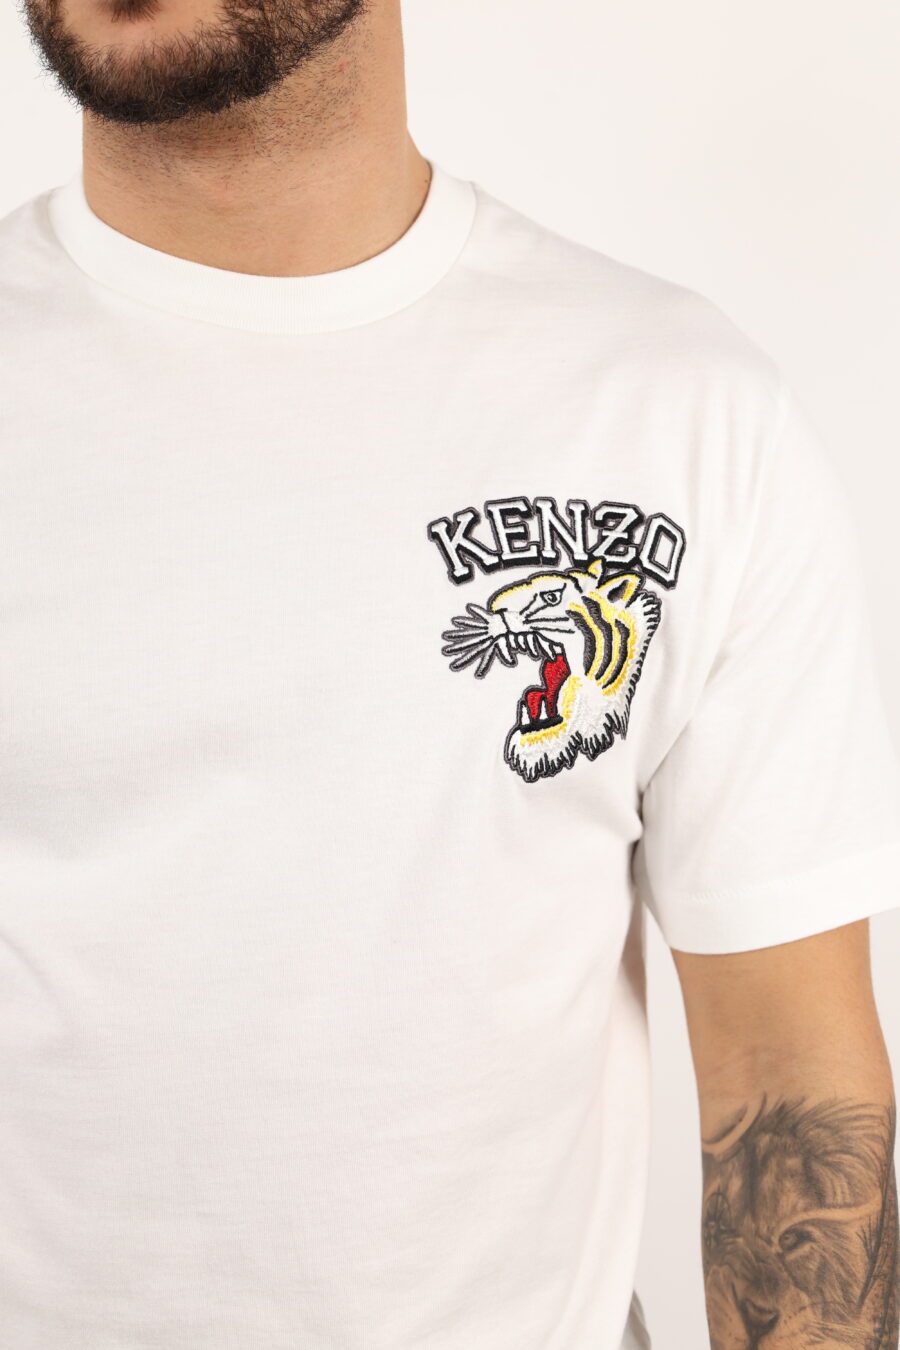 Camiseta blanca "oversize" logo pequeño tigre relieve - 109103 1